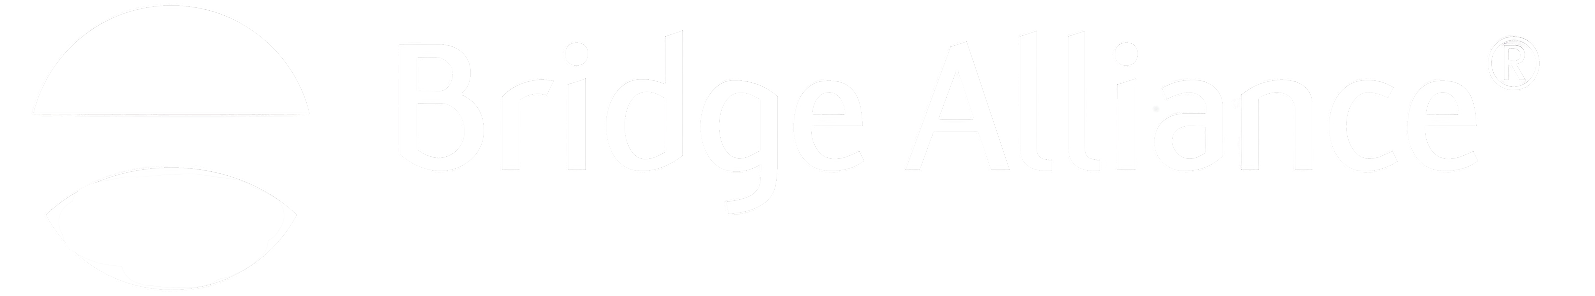 BridgeAlliance_logo_white